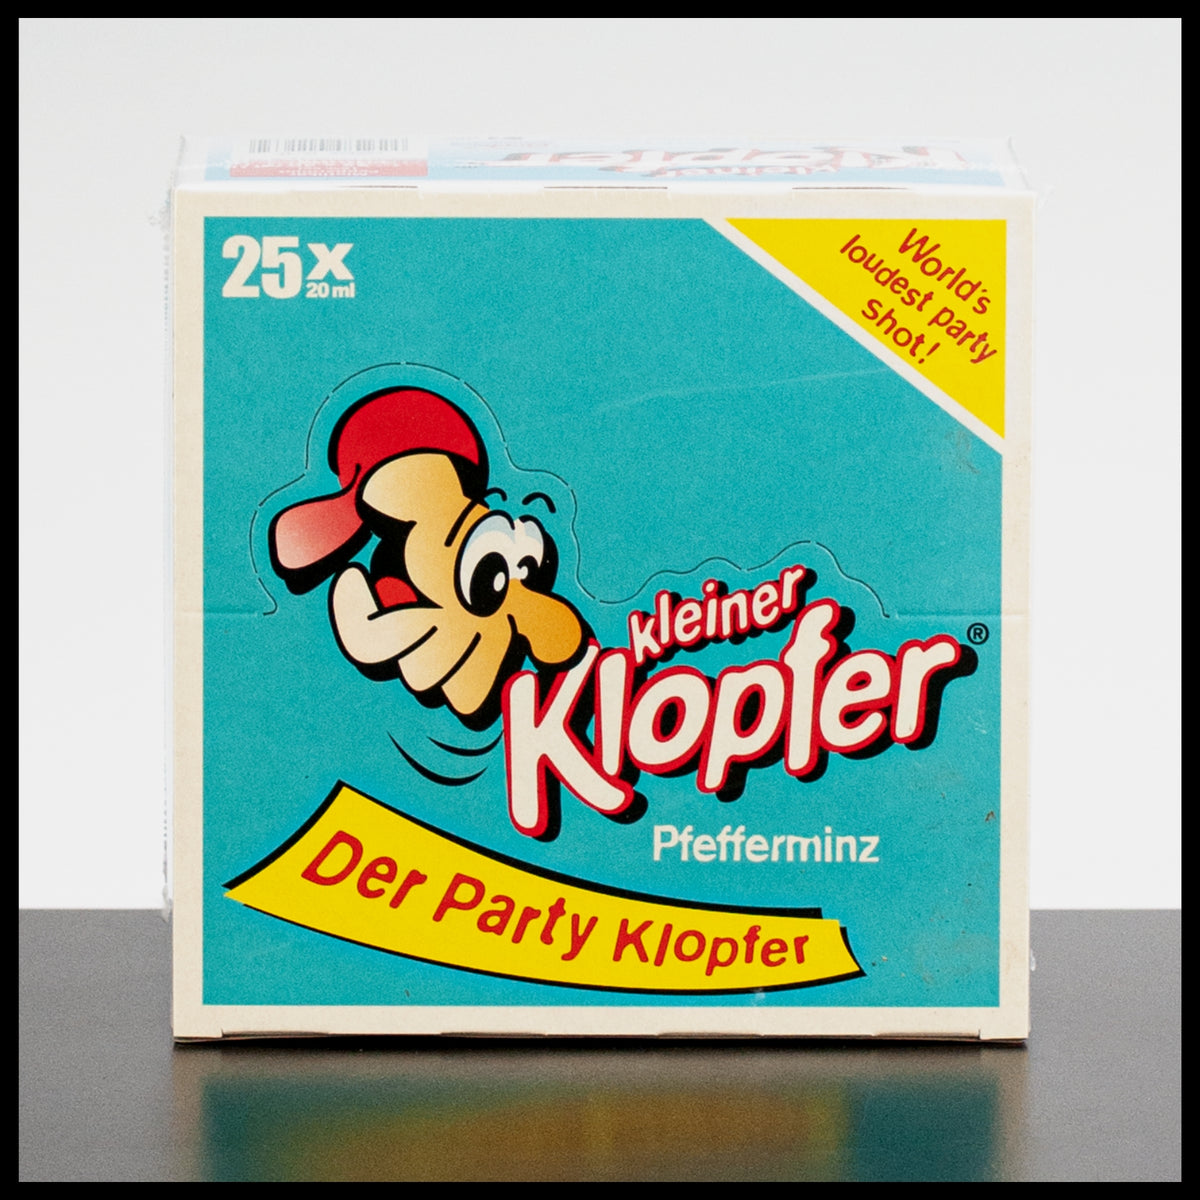 Kleiner Klopfer Pfefferminz 25x 0,02L - 18% Vol. - Trinklusiv